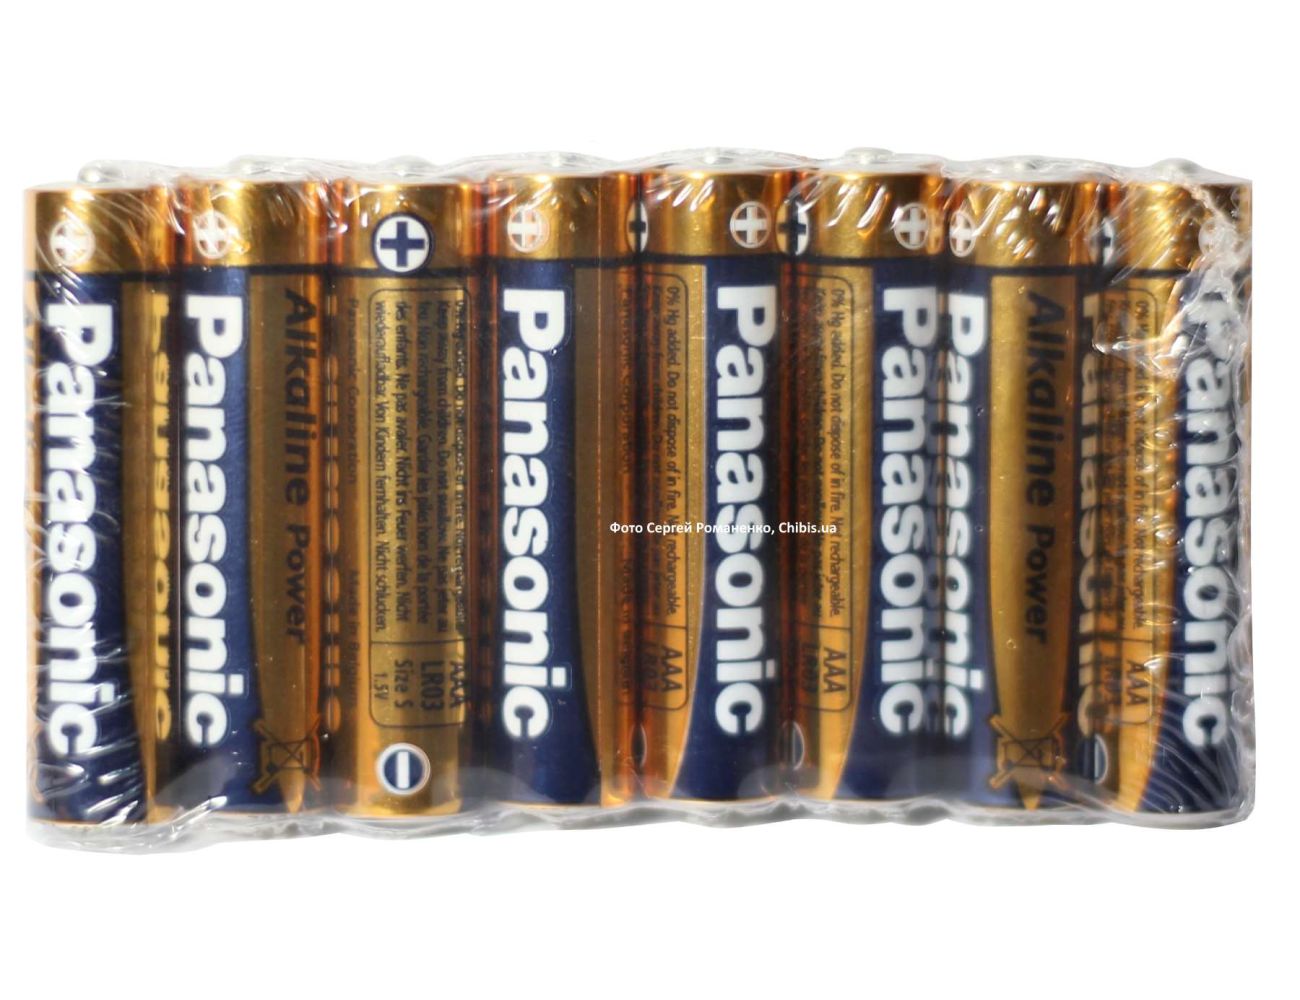 Батарейка ААА Panasonic Alkaline Power LR03 1.5V пленка 8/8 шт LR03REB/8P